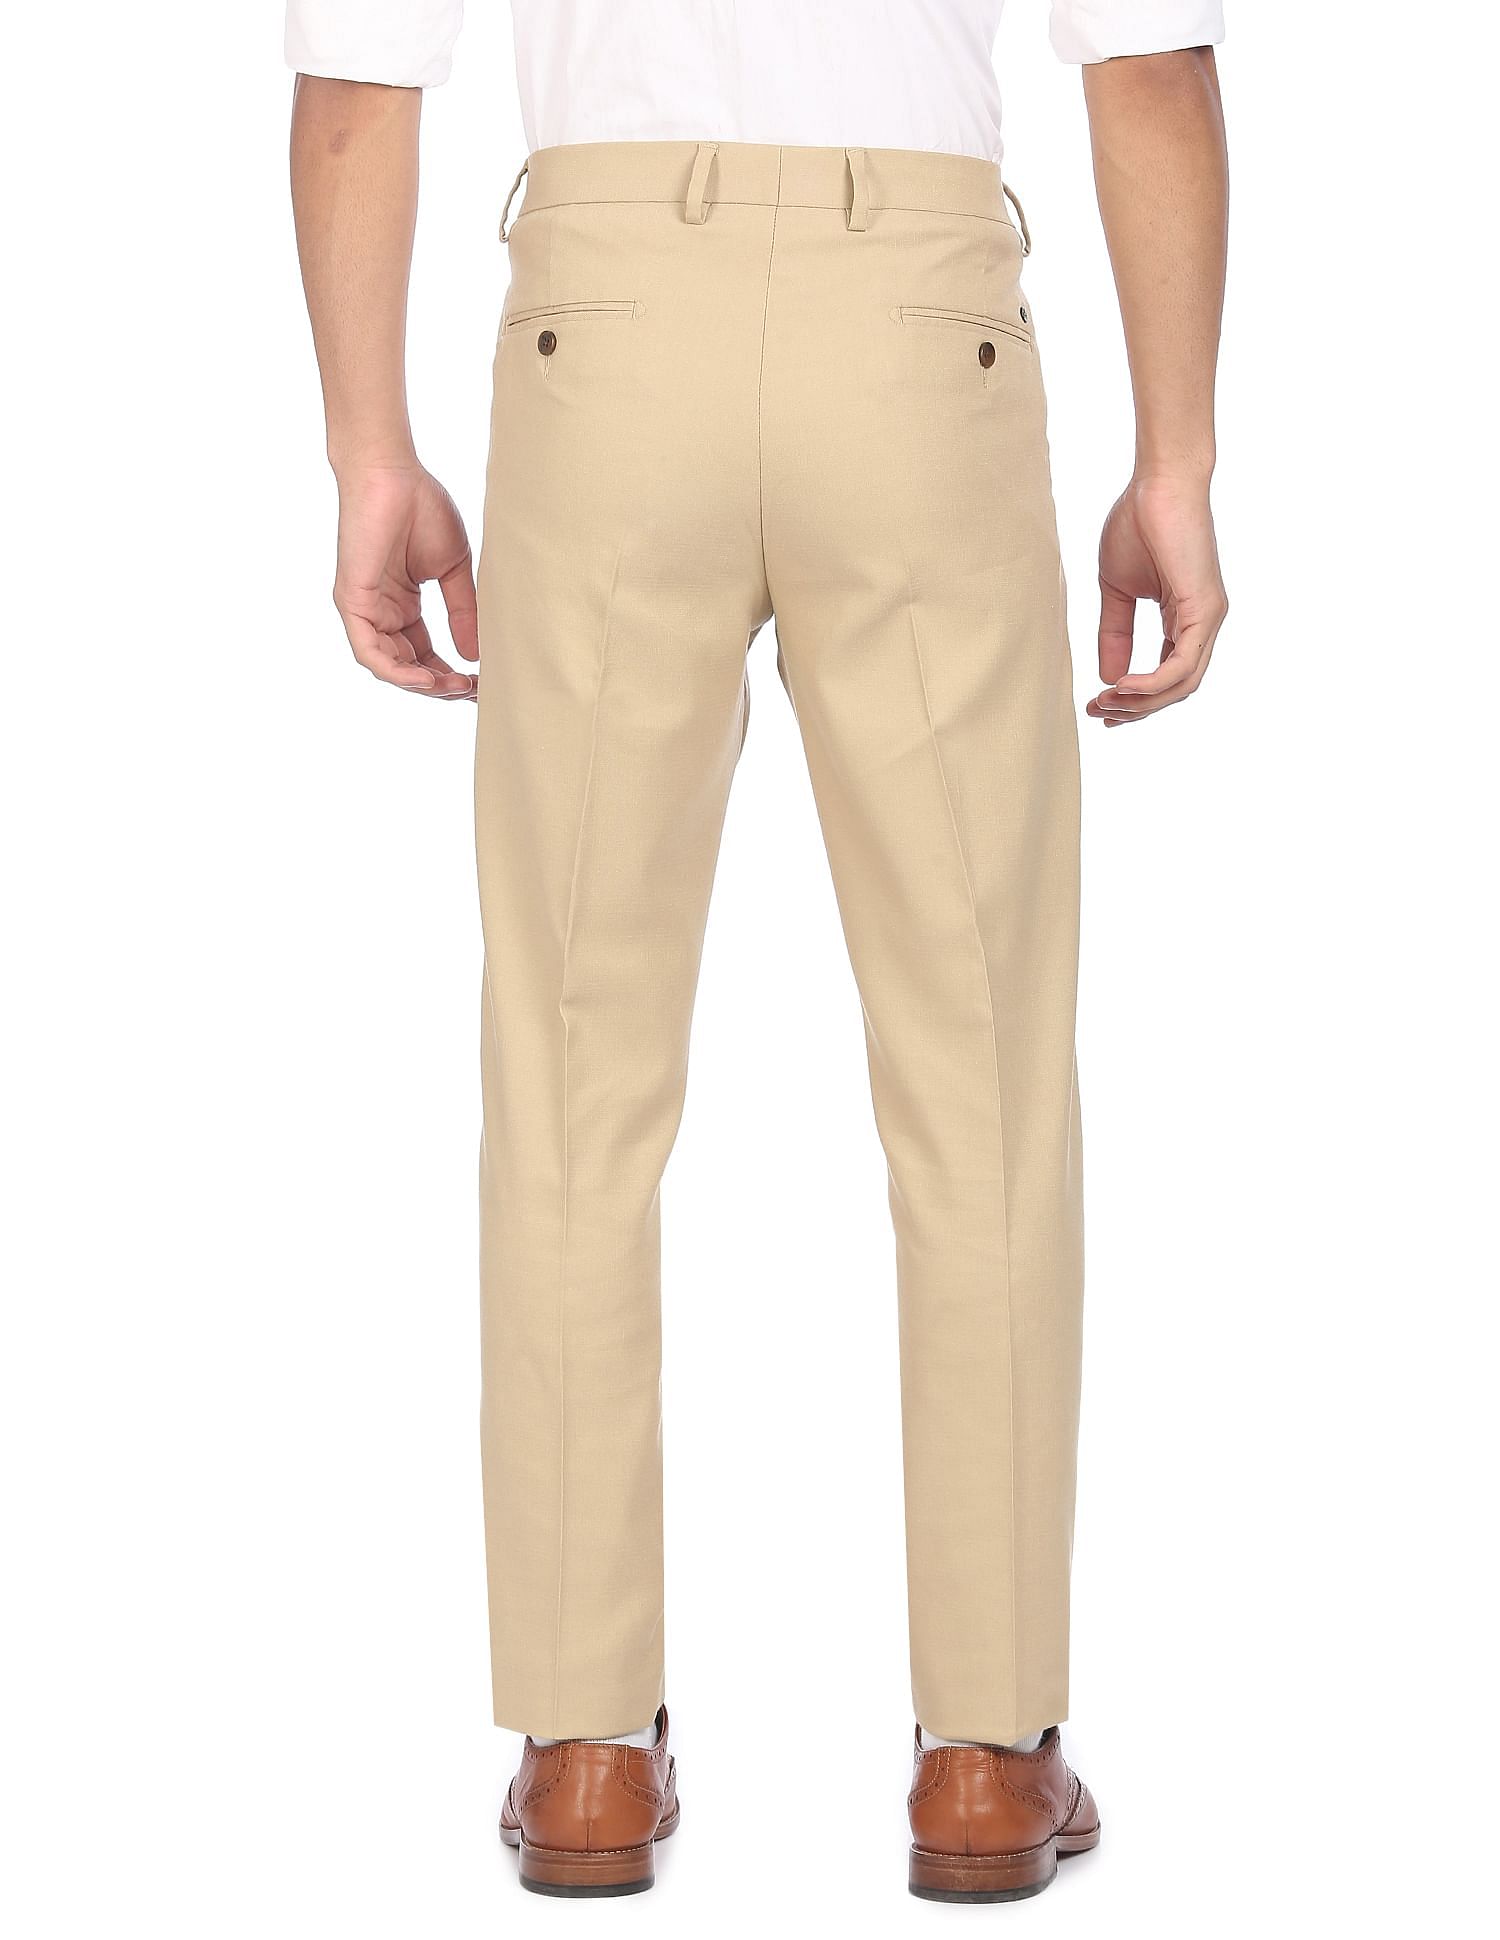 Buy online ASHTOM Fawn Color Formal Cotton Trouser Regular Fit For Men